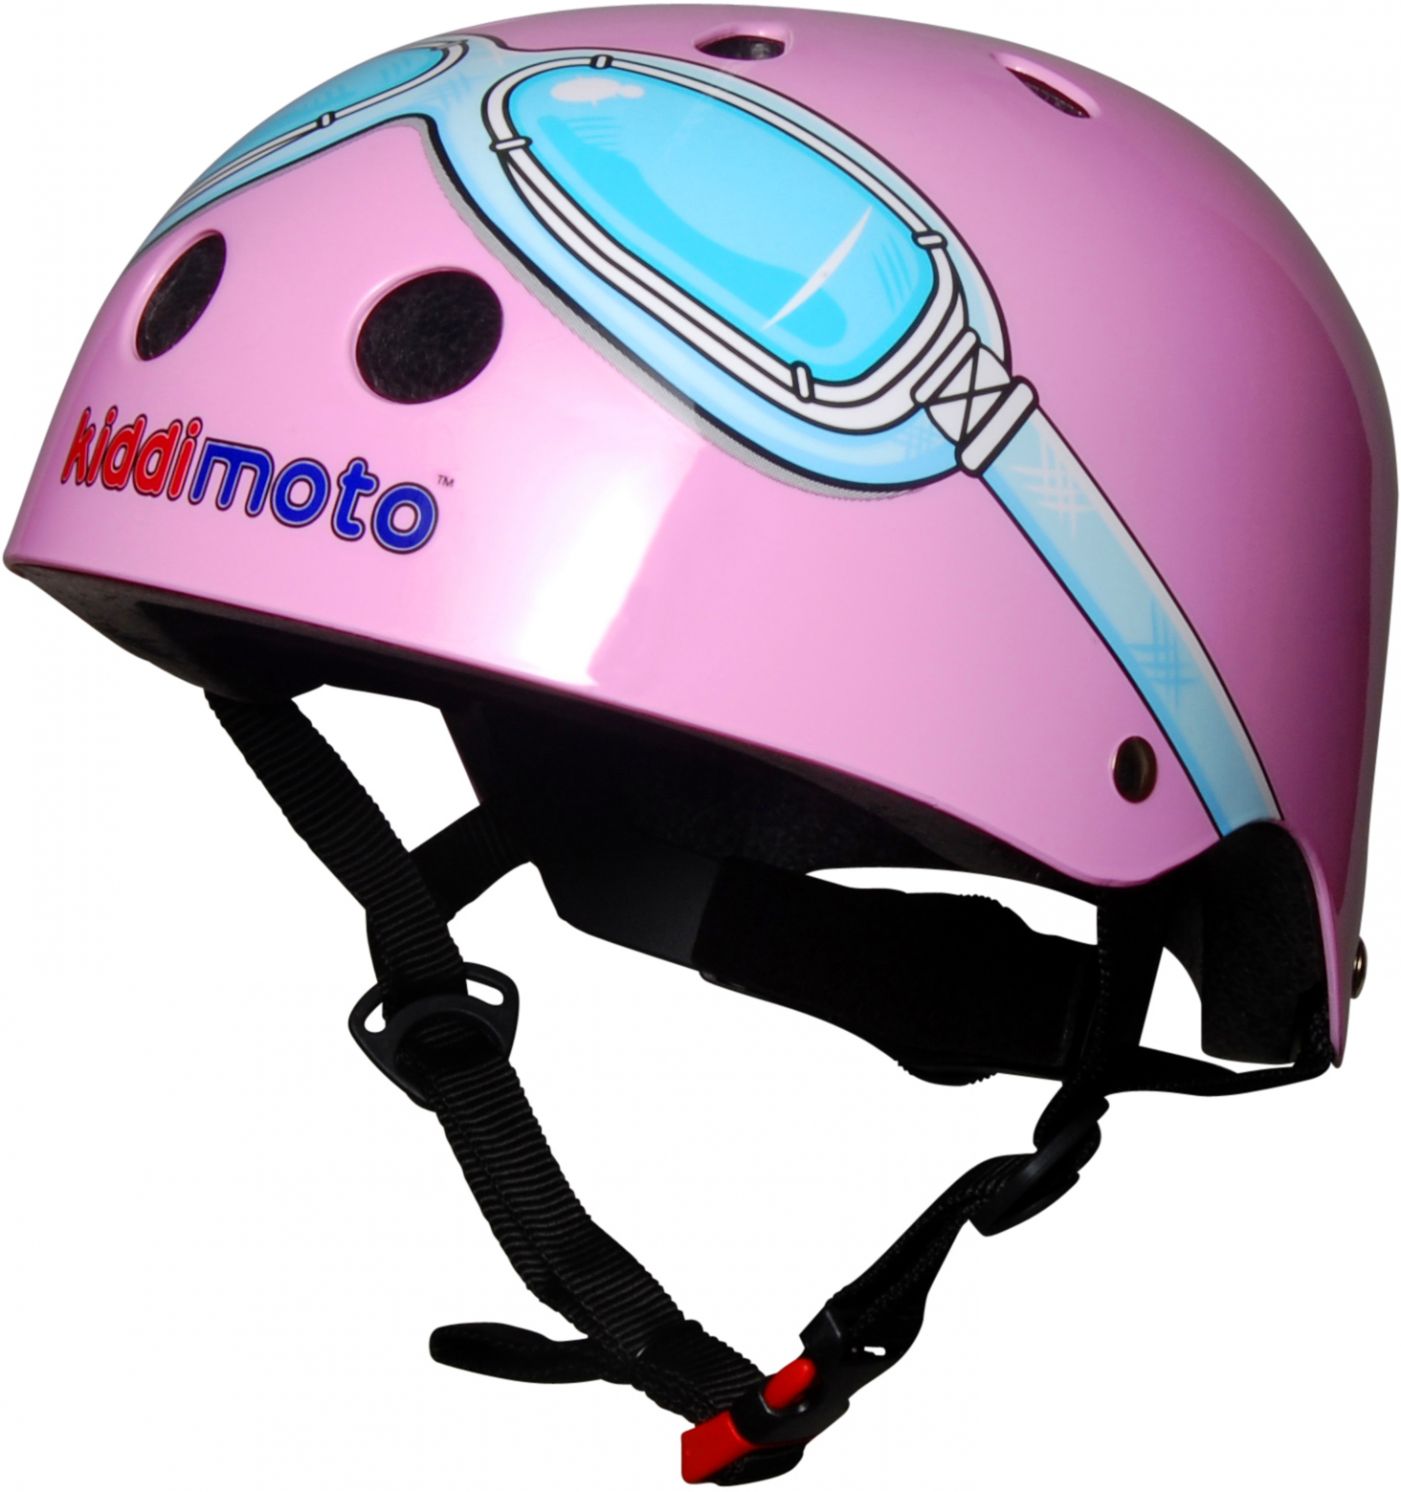 Шлем детский Kiddimoto очки пилота, розовый, размер M 53-58см фото 1